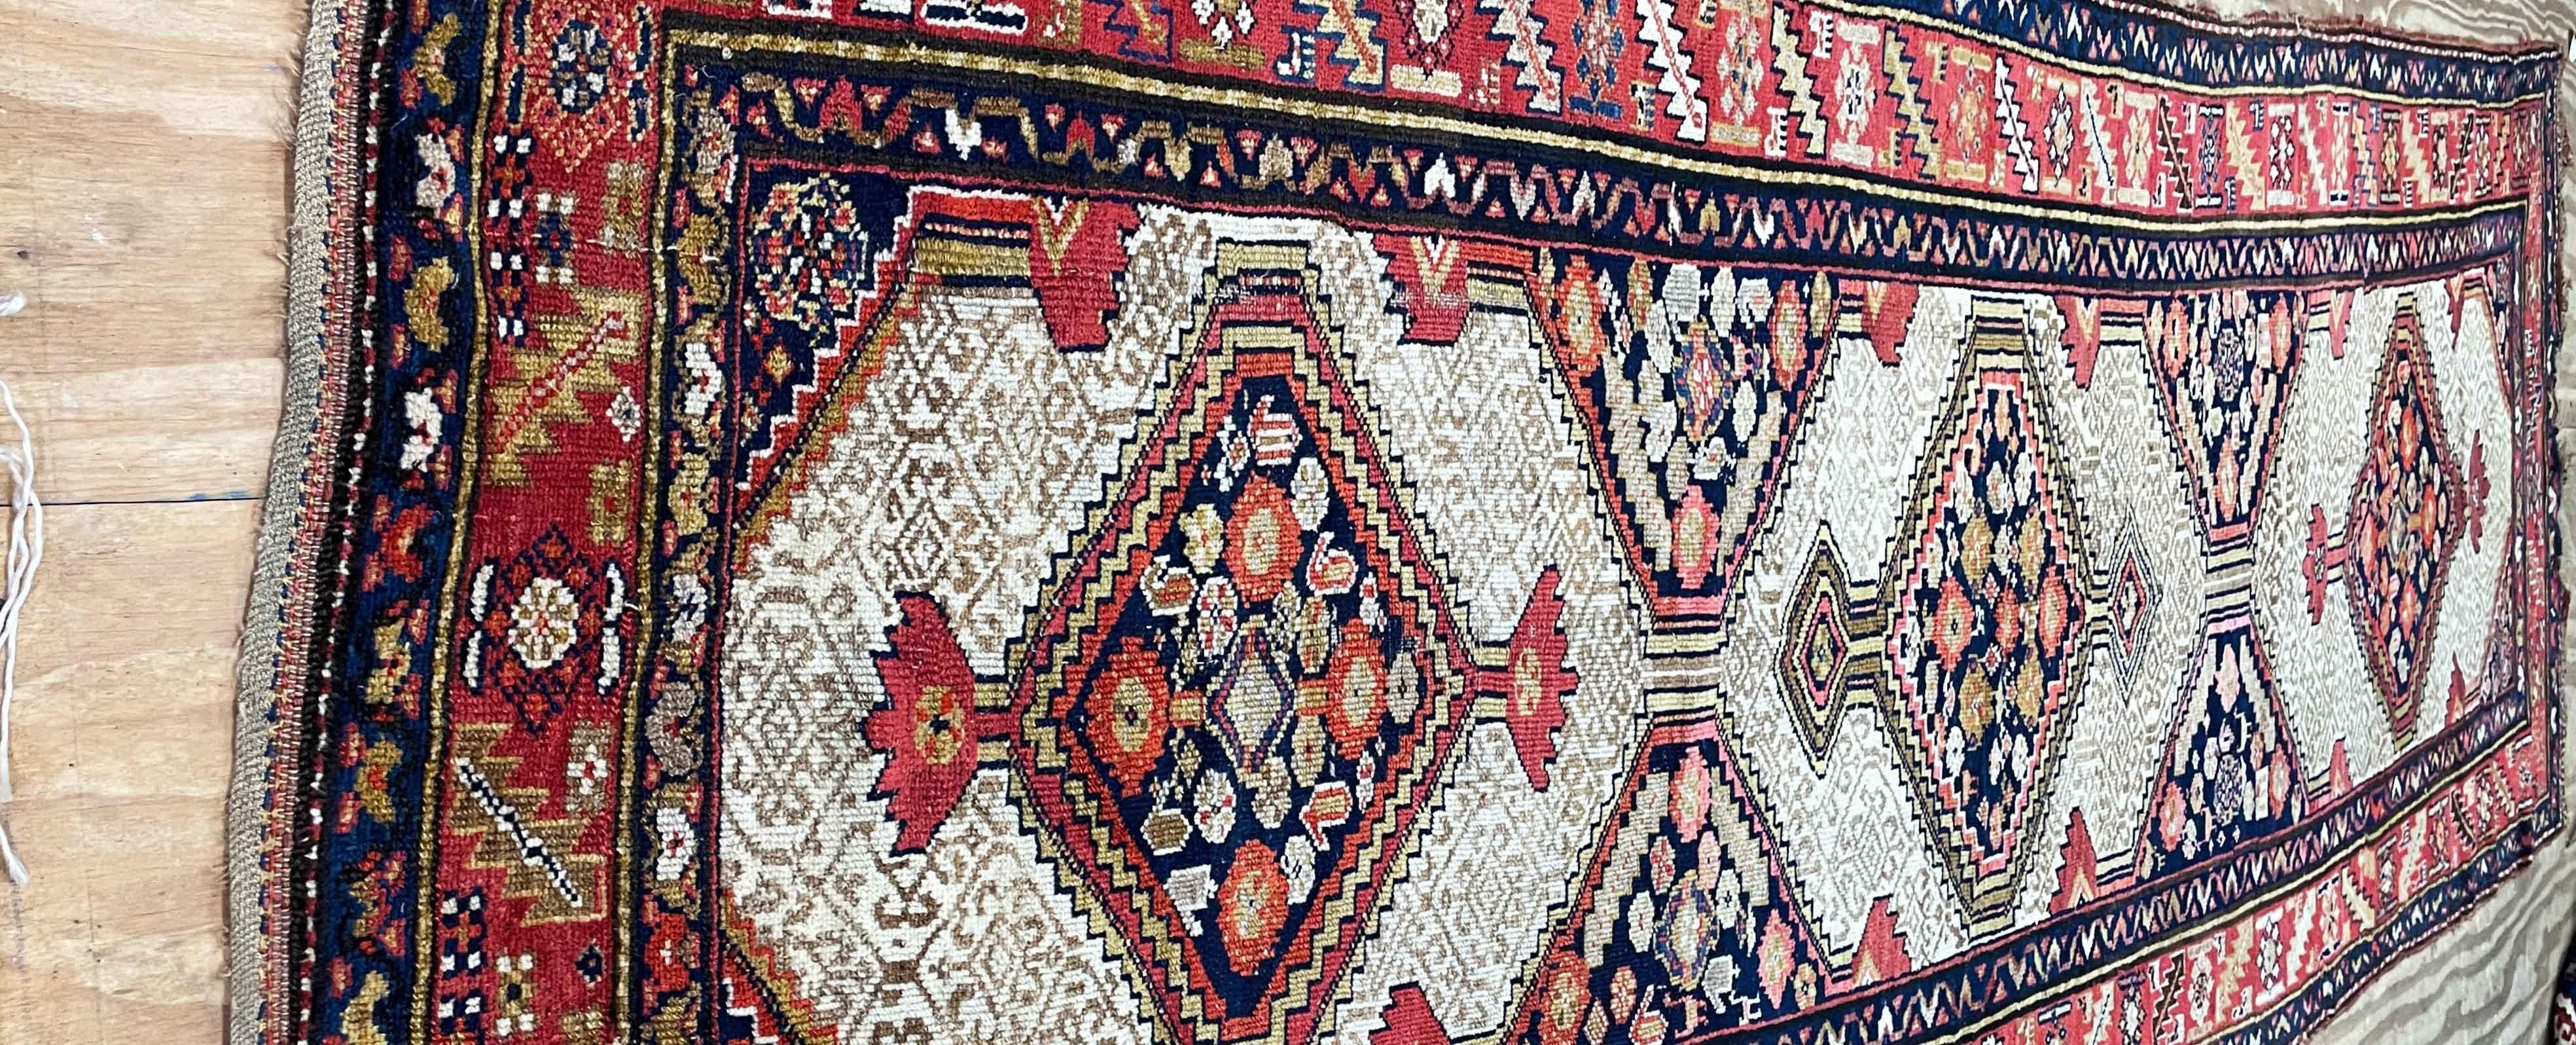 Wool Antique Persian Serab/Serapi Runner, Camel Color, c-1880 For Sale